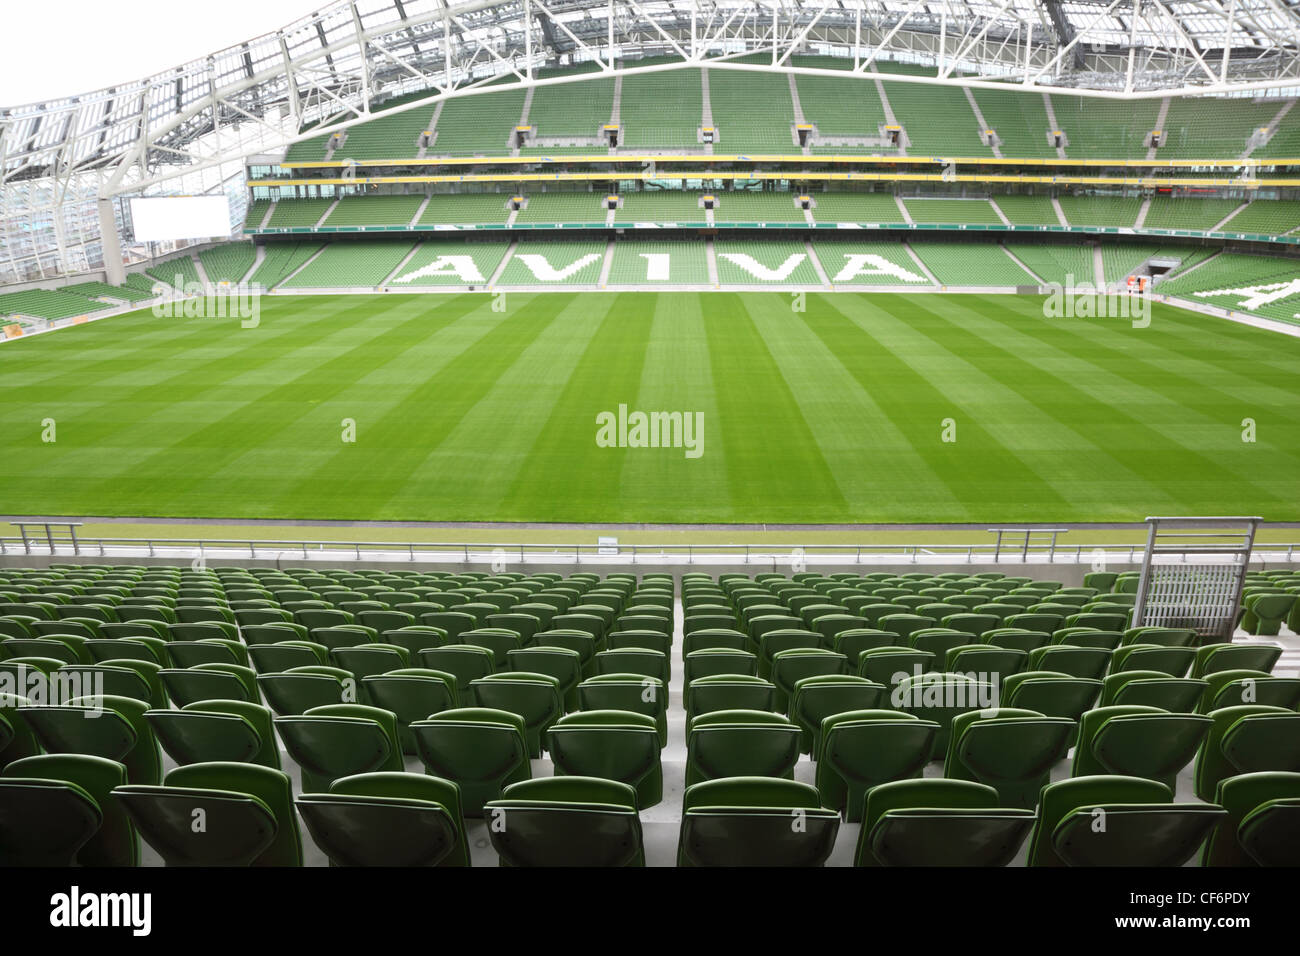 DUBLIN - JUNE 10: Rows of green seats in an empty stadium Aviva June 10, 2010 in Dublin. Stadium Aviva after repair Stock Photo